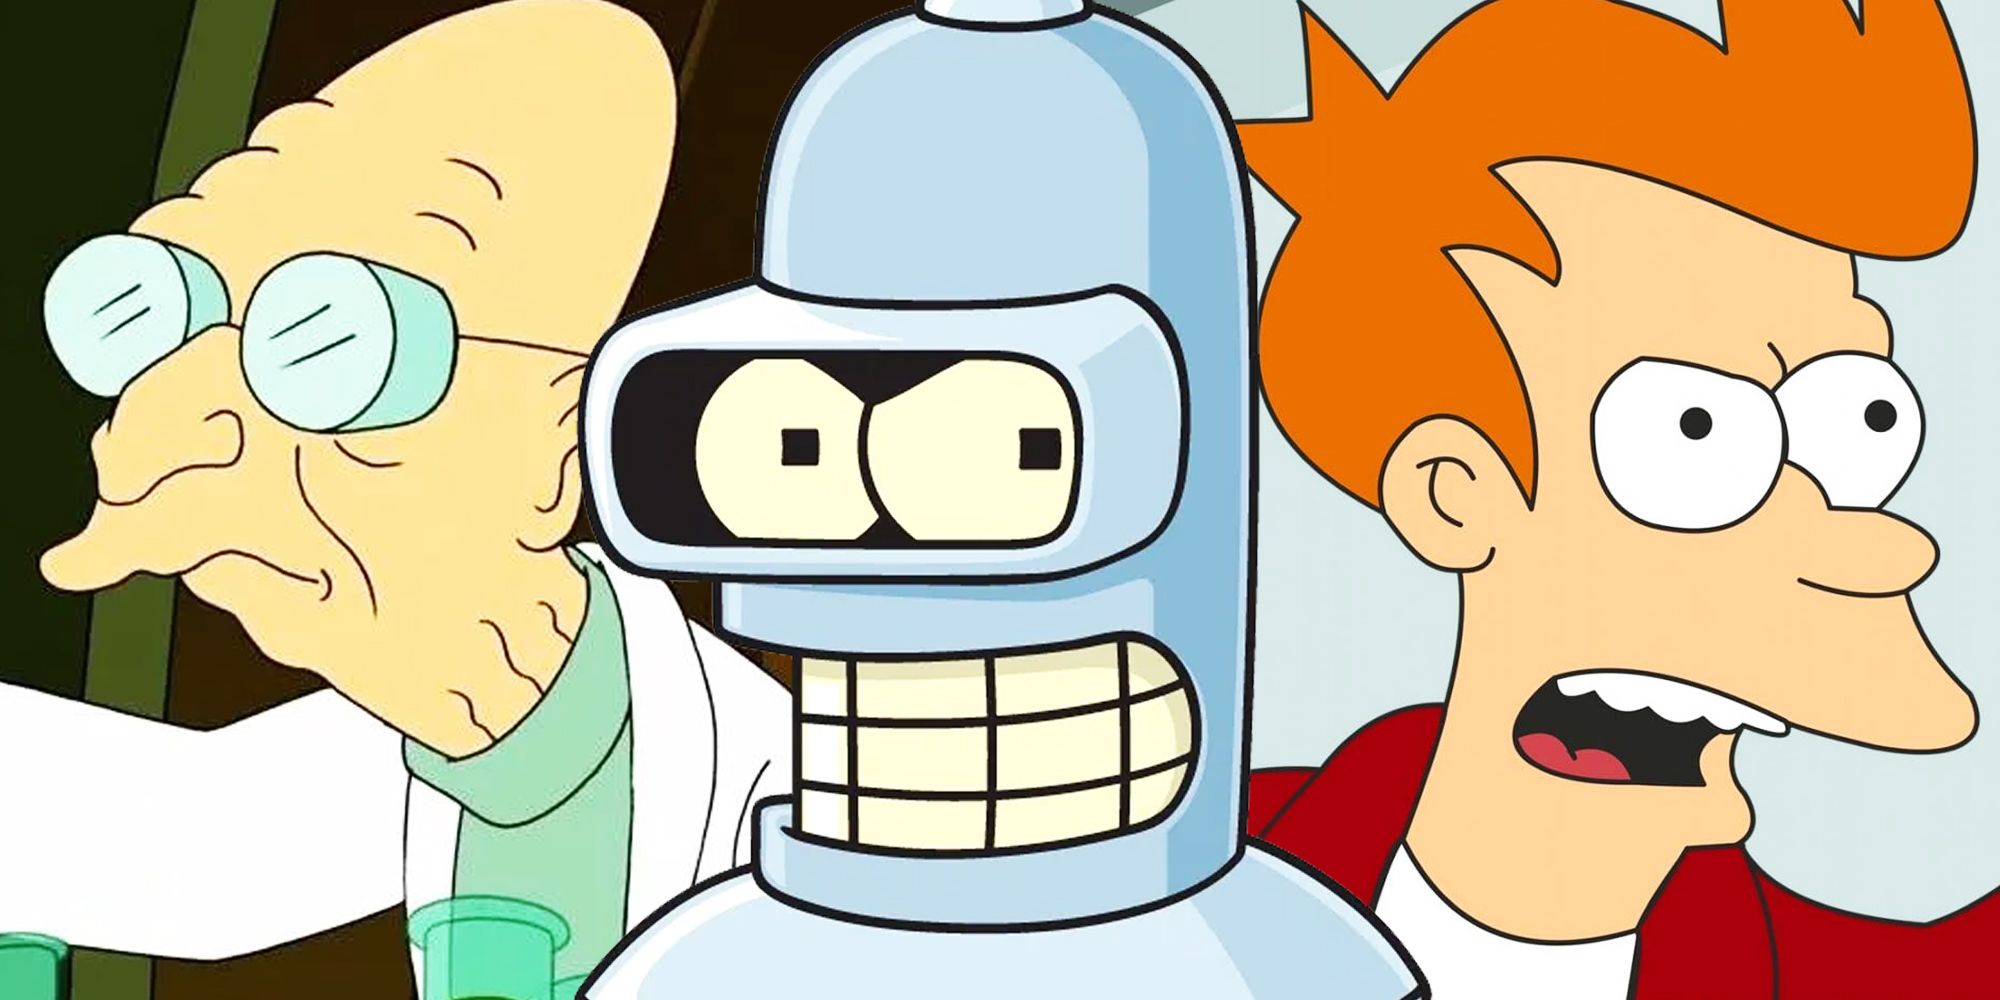 Bender, Farnsworth, and Fry